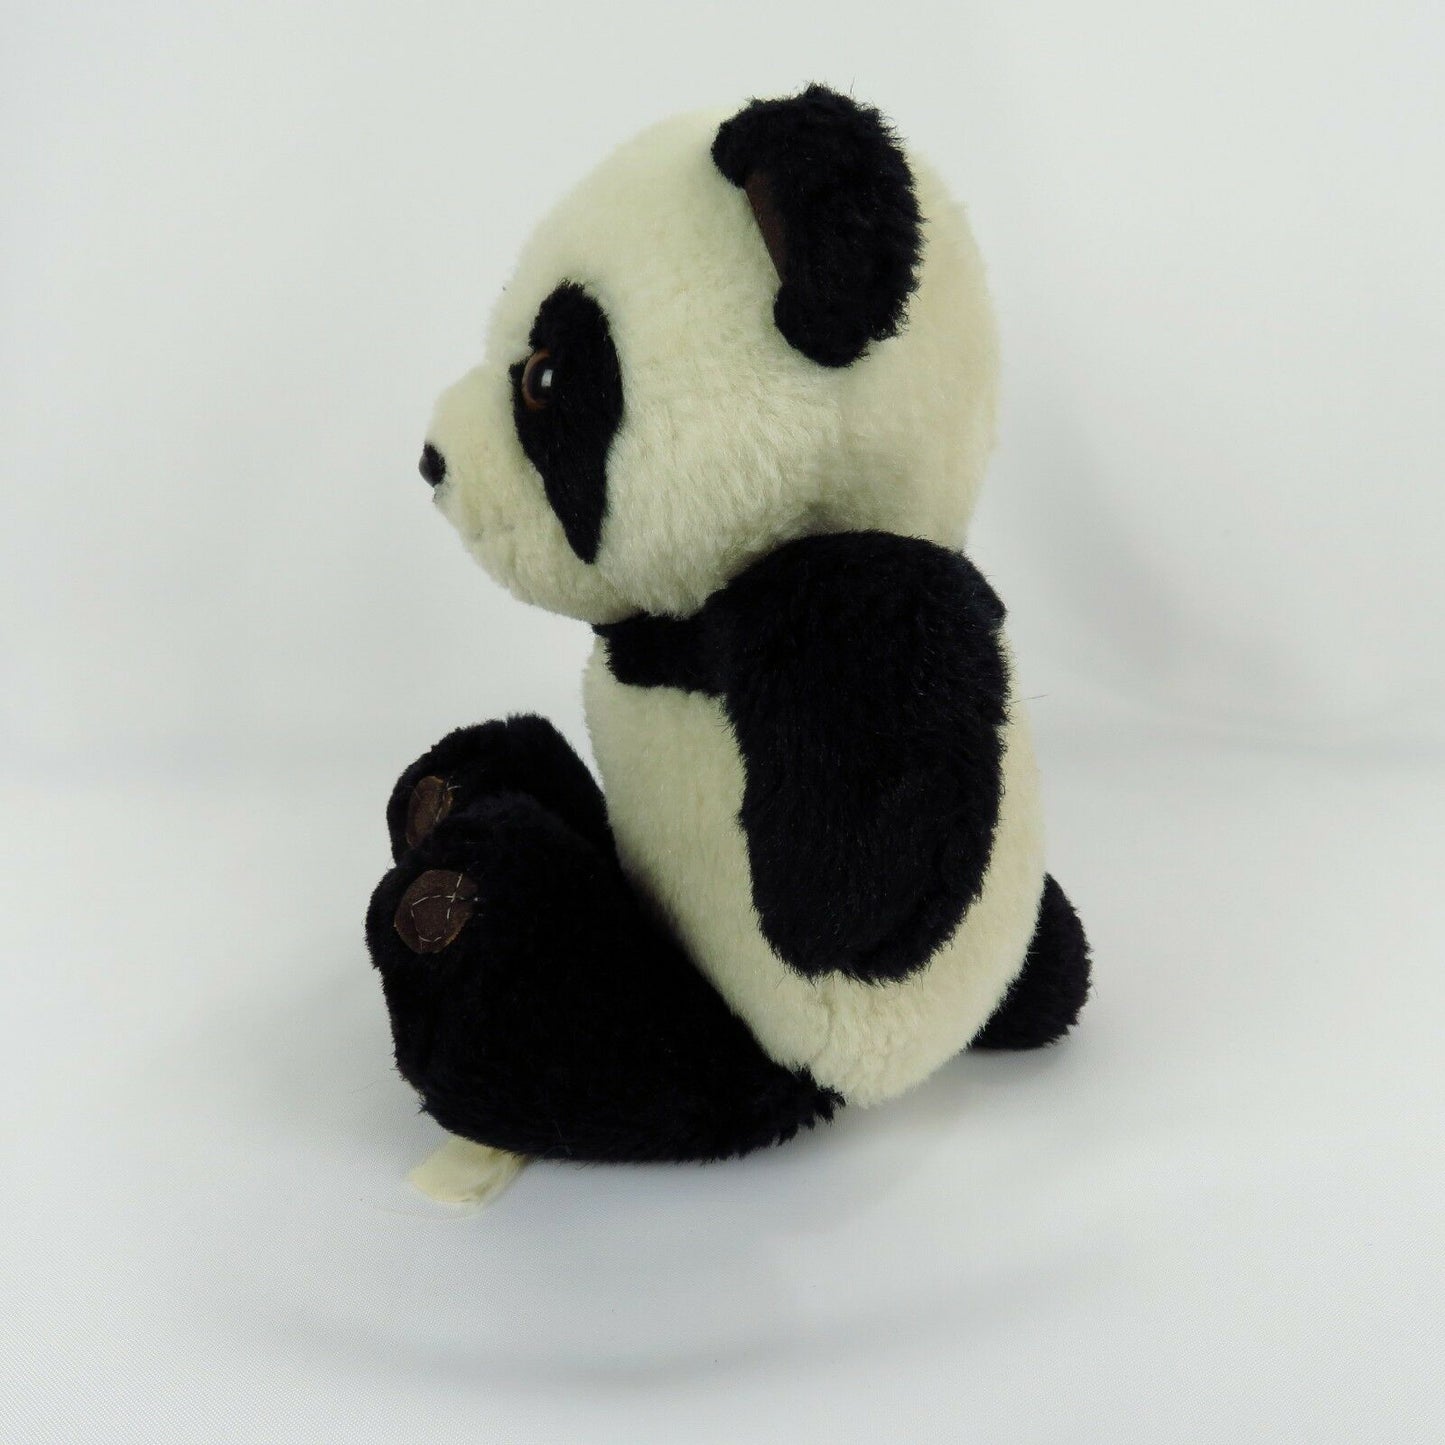 Vintage Panda Teddy Bear Plush Stuffed Animal Toy Doll Black White Brown - At Grandma's Table